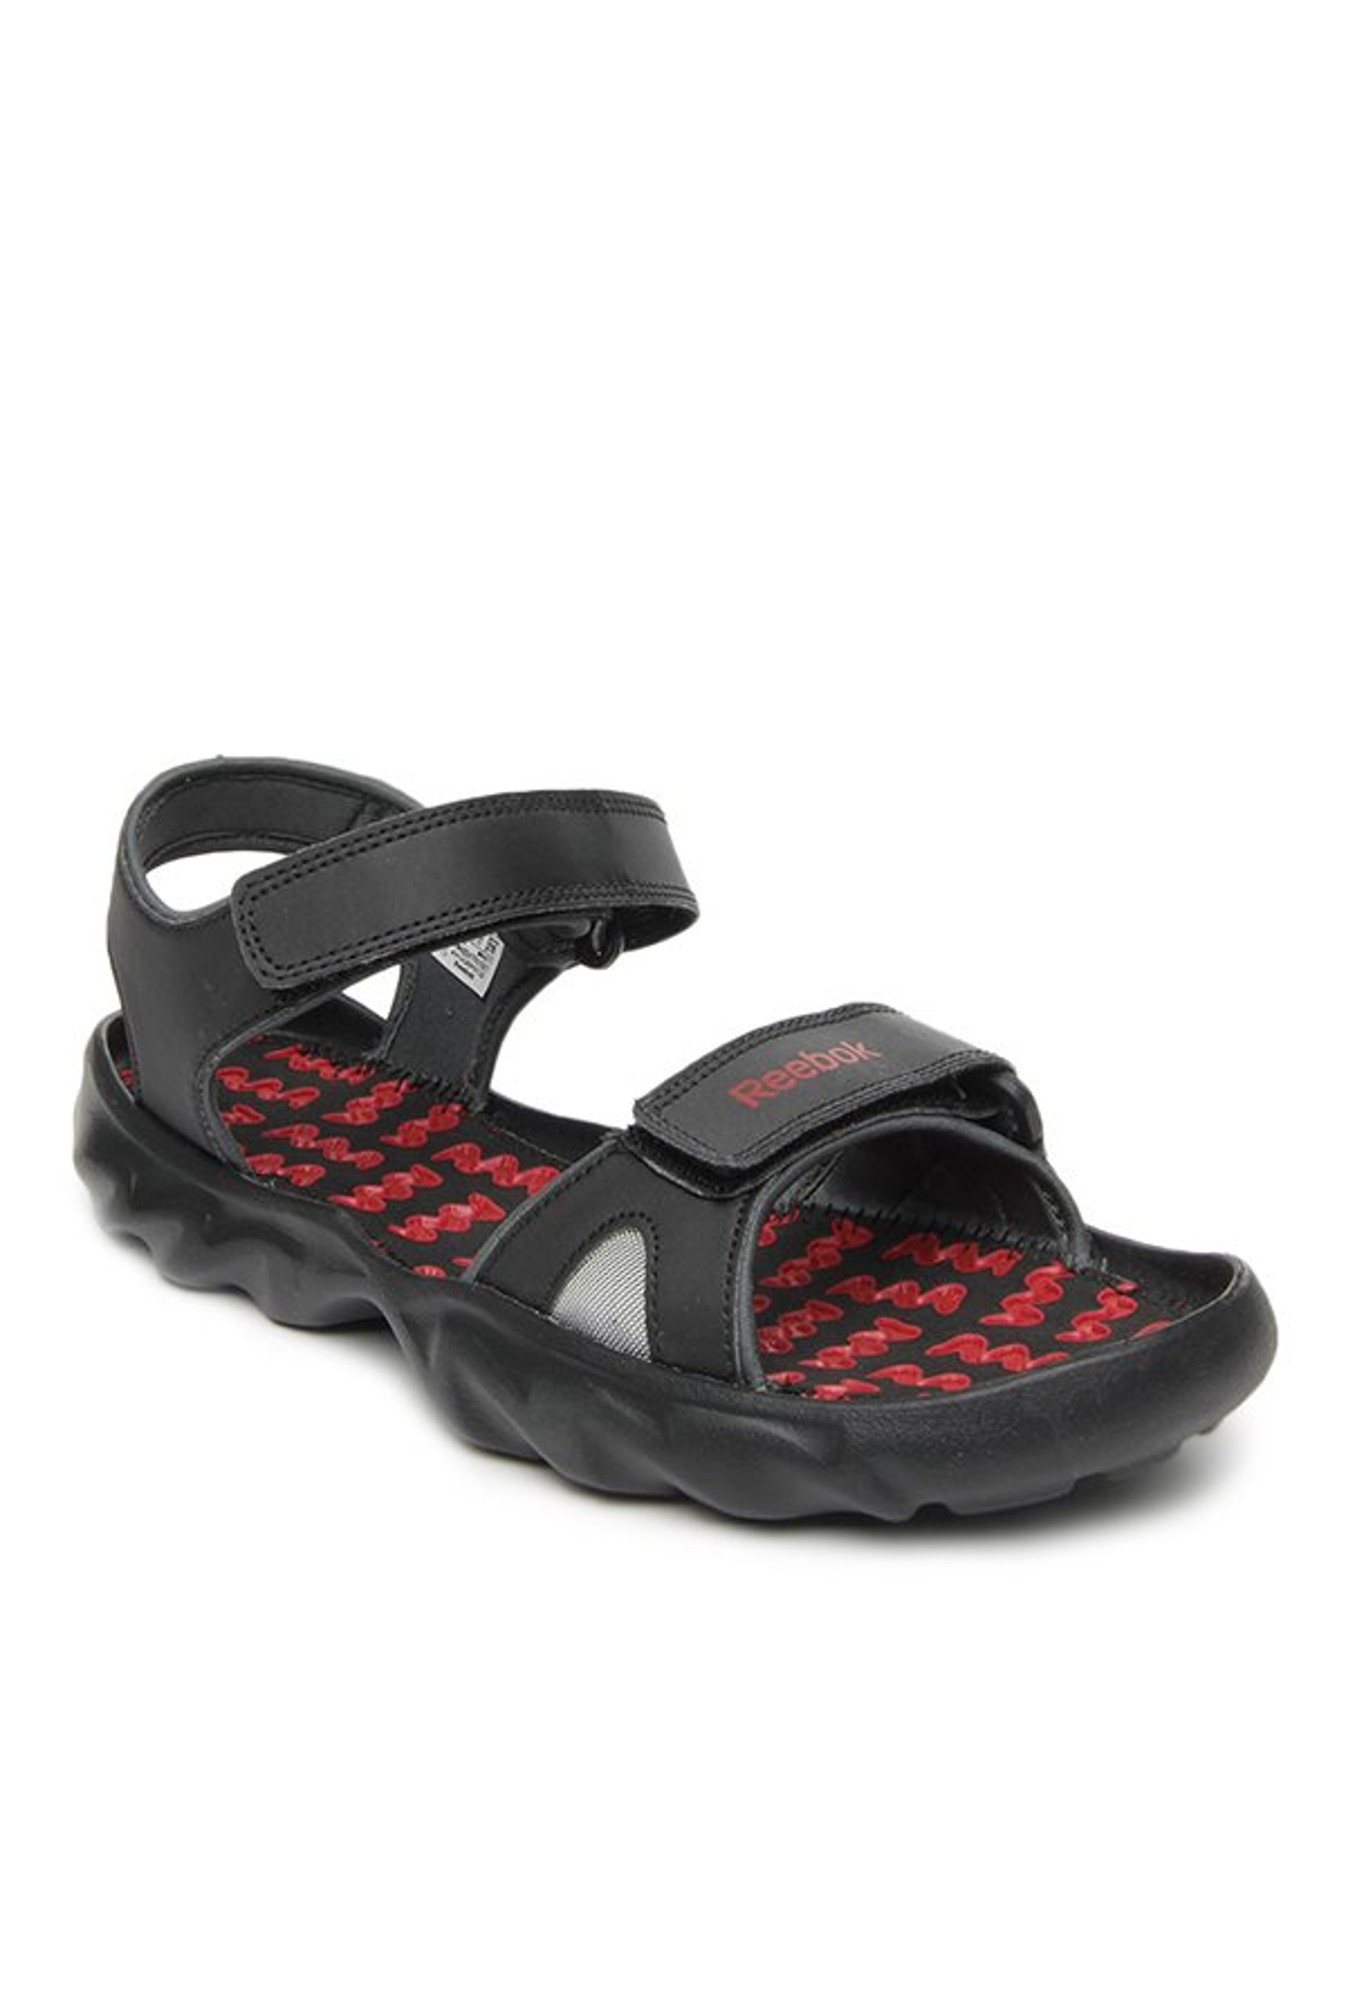 Buy Reebok Black \u0026 Red Floater Sandals 